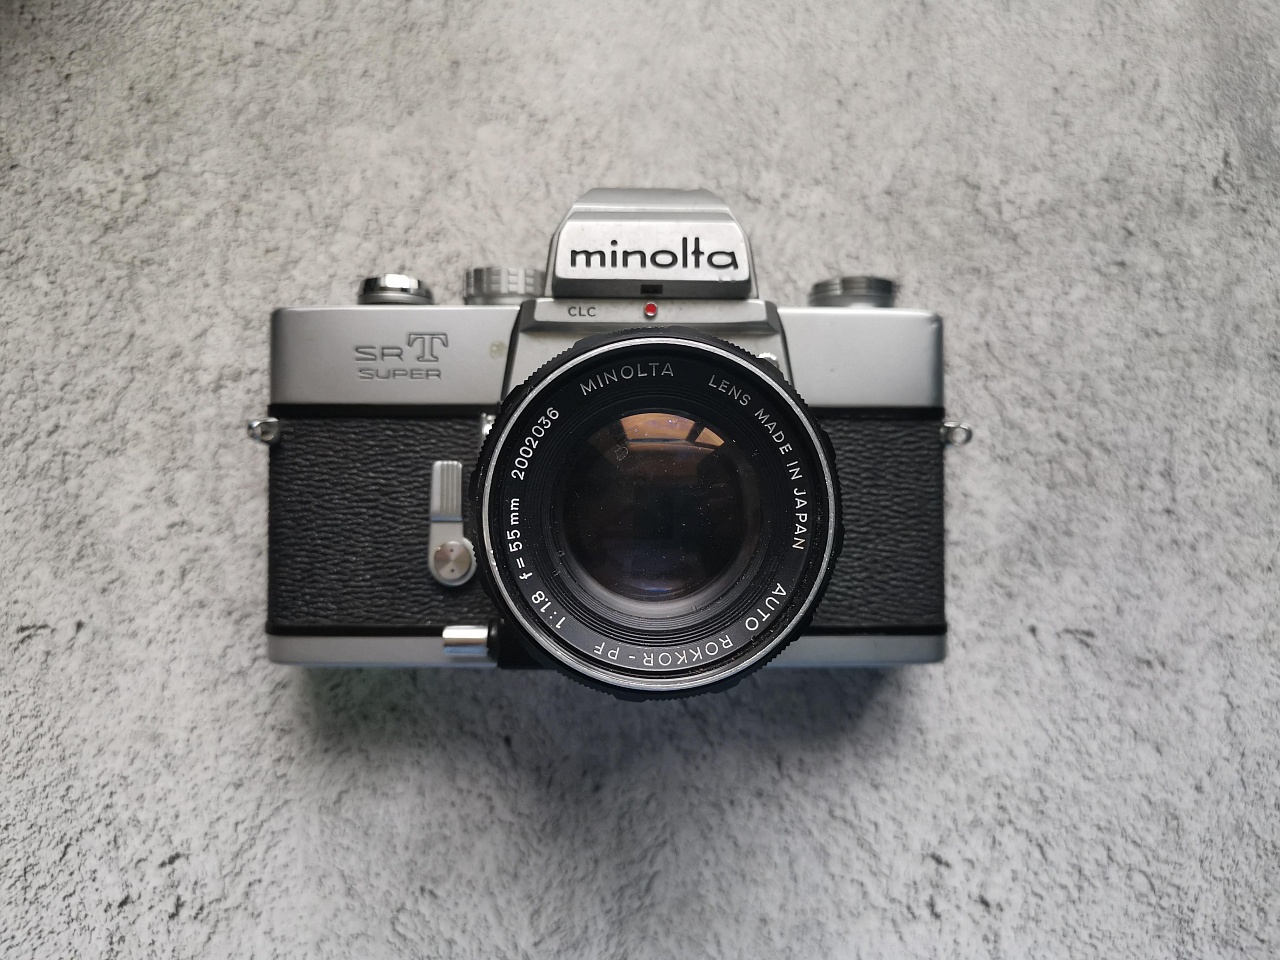 Minolta SRT super + Minolta mc rokkor-pf 55 mm f/1.8 фото №1